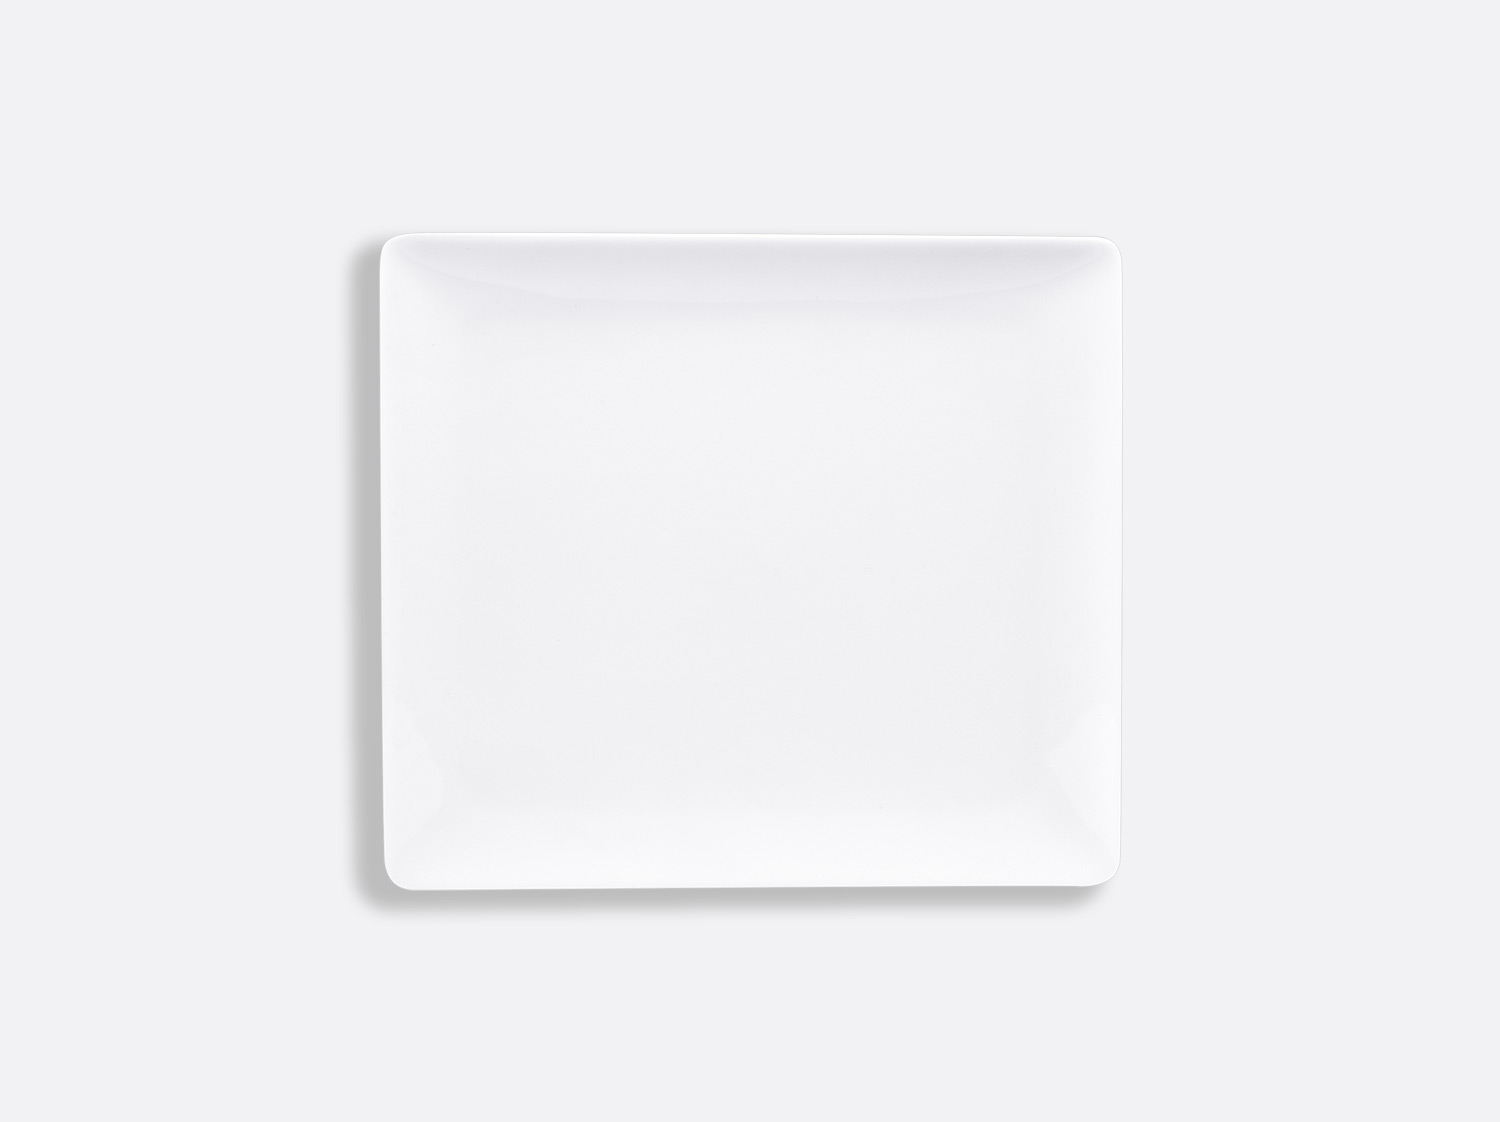 China Rectangular tray 6.7'' x 5.9'' of the collection Fantaisies blanches | Bernardaud